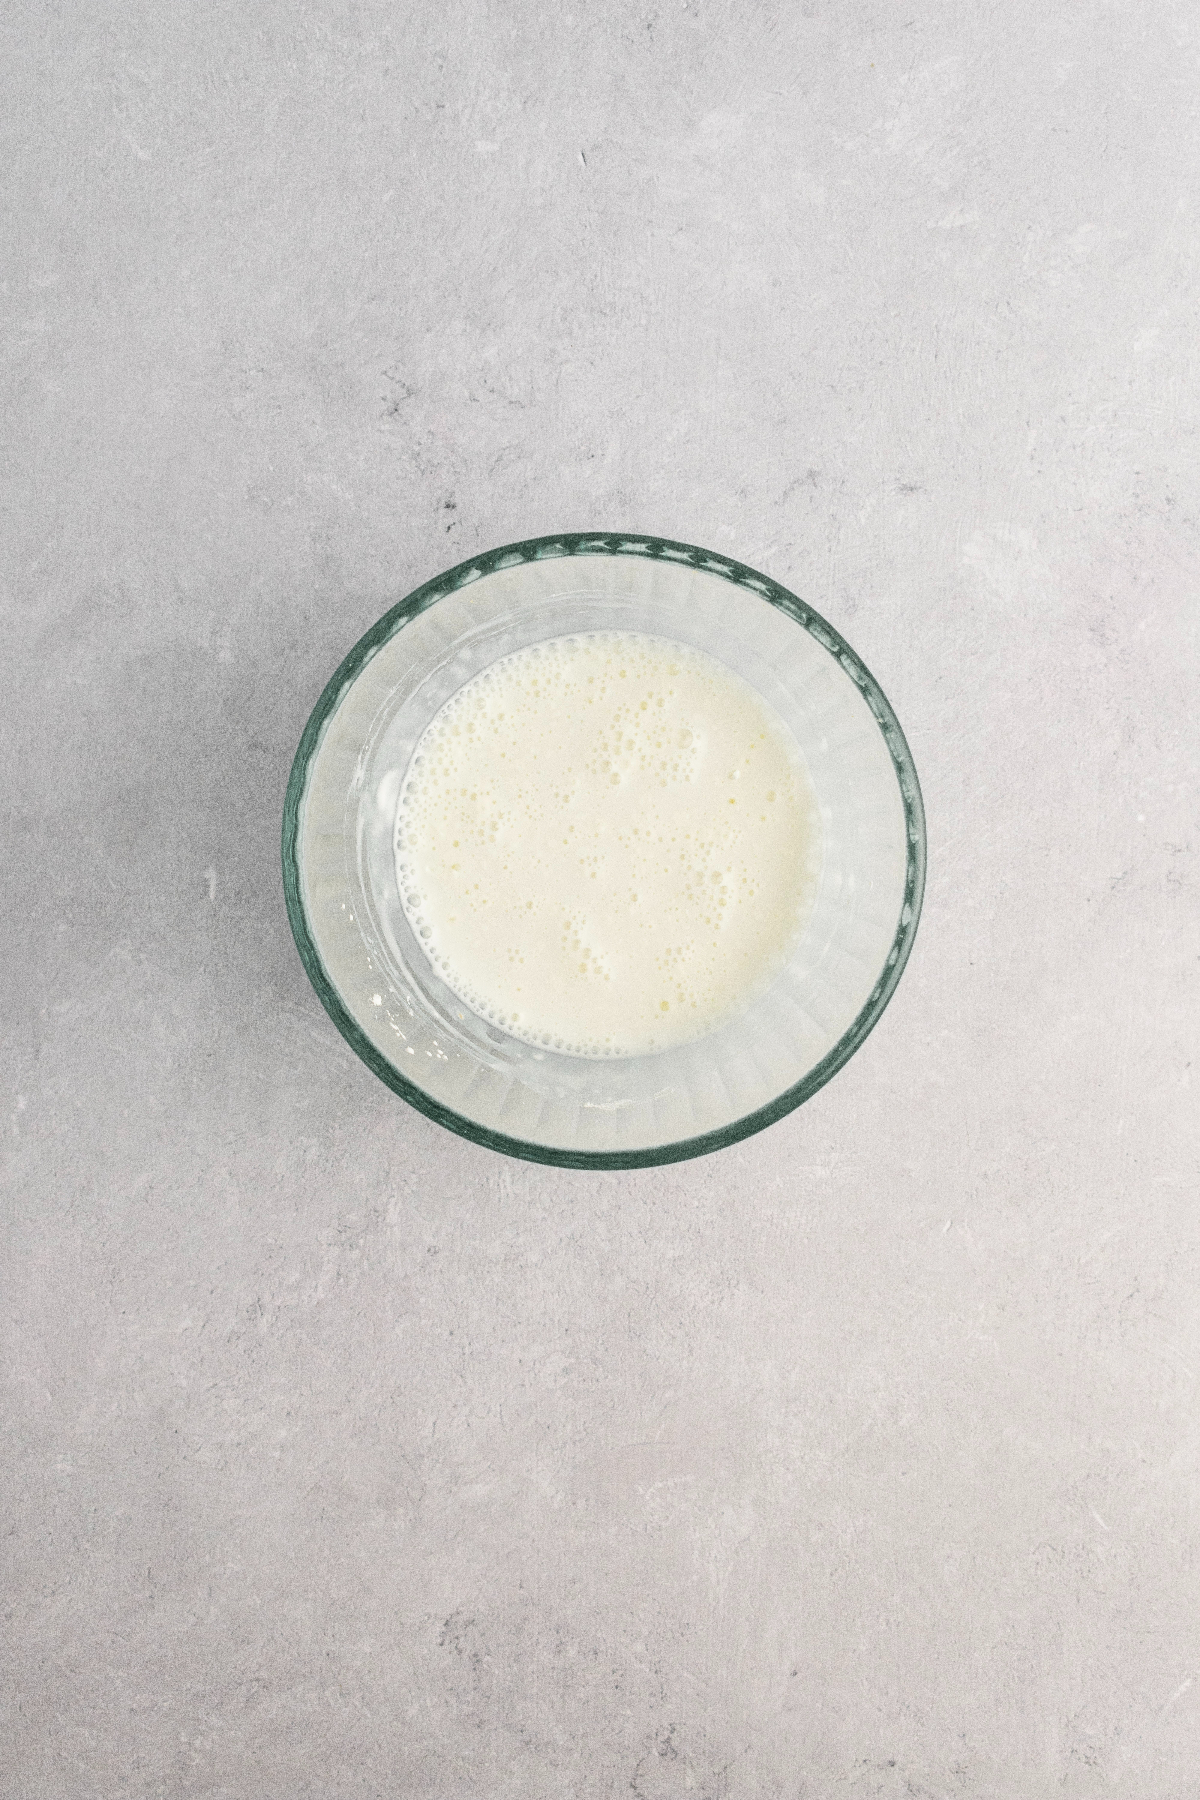 Corn starch milk mixture in a small glass bowl.